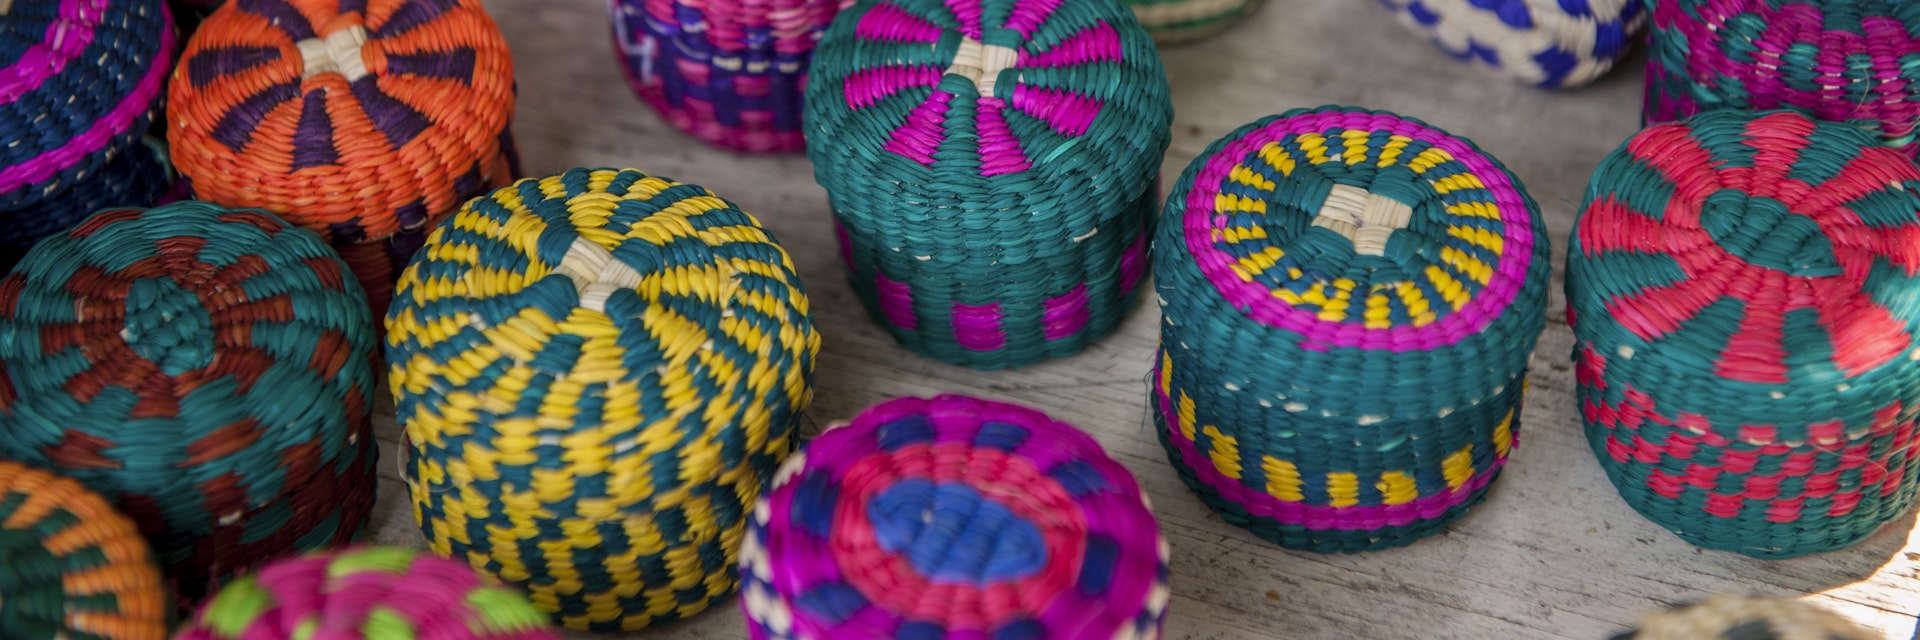 Colorful baskets, West End, Roatan, Honduras